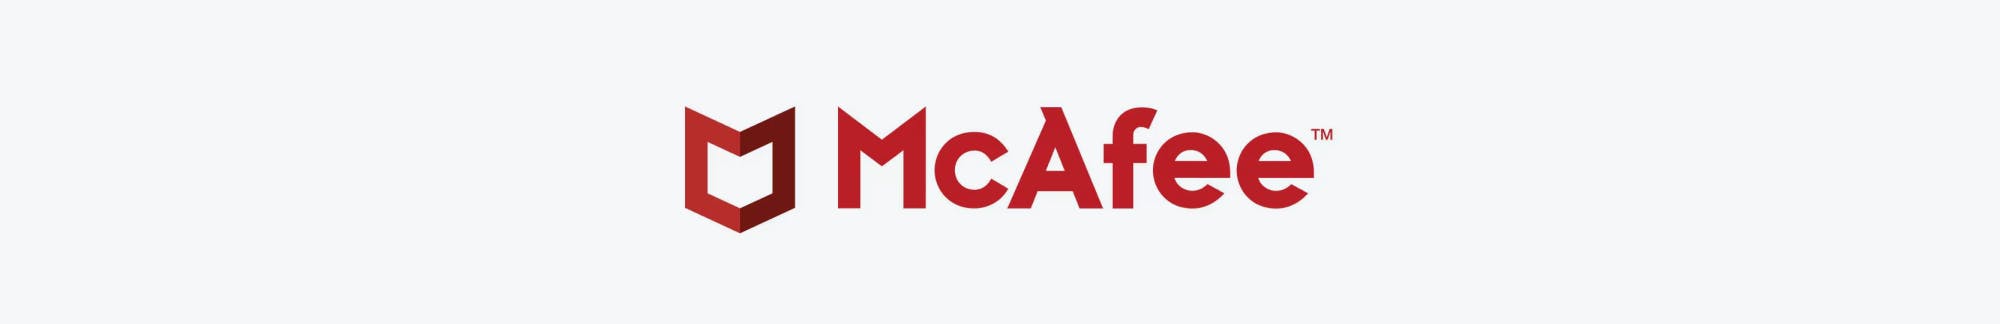 McAfee LLC